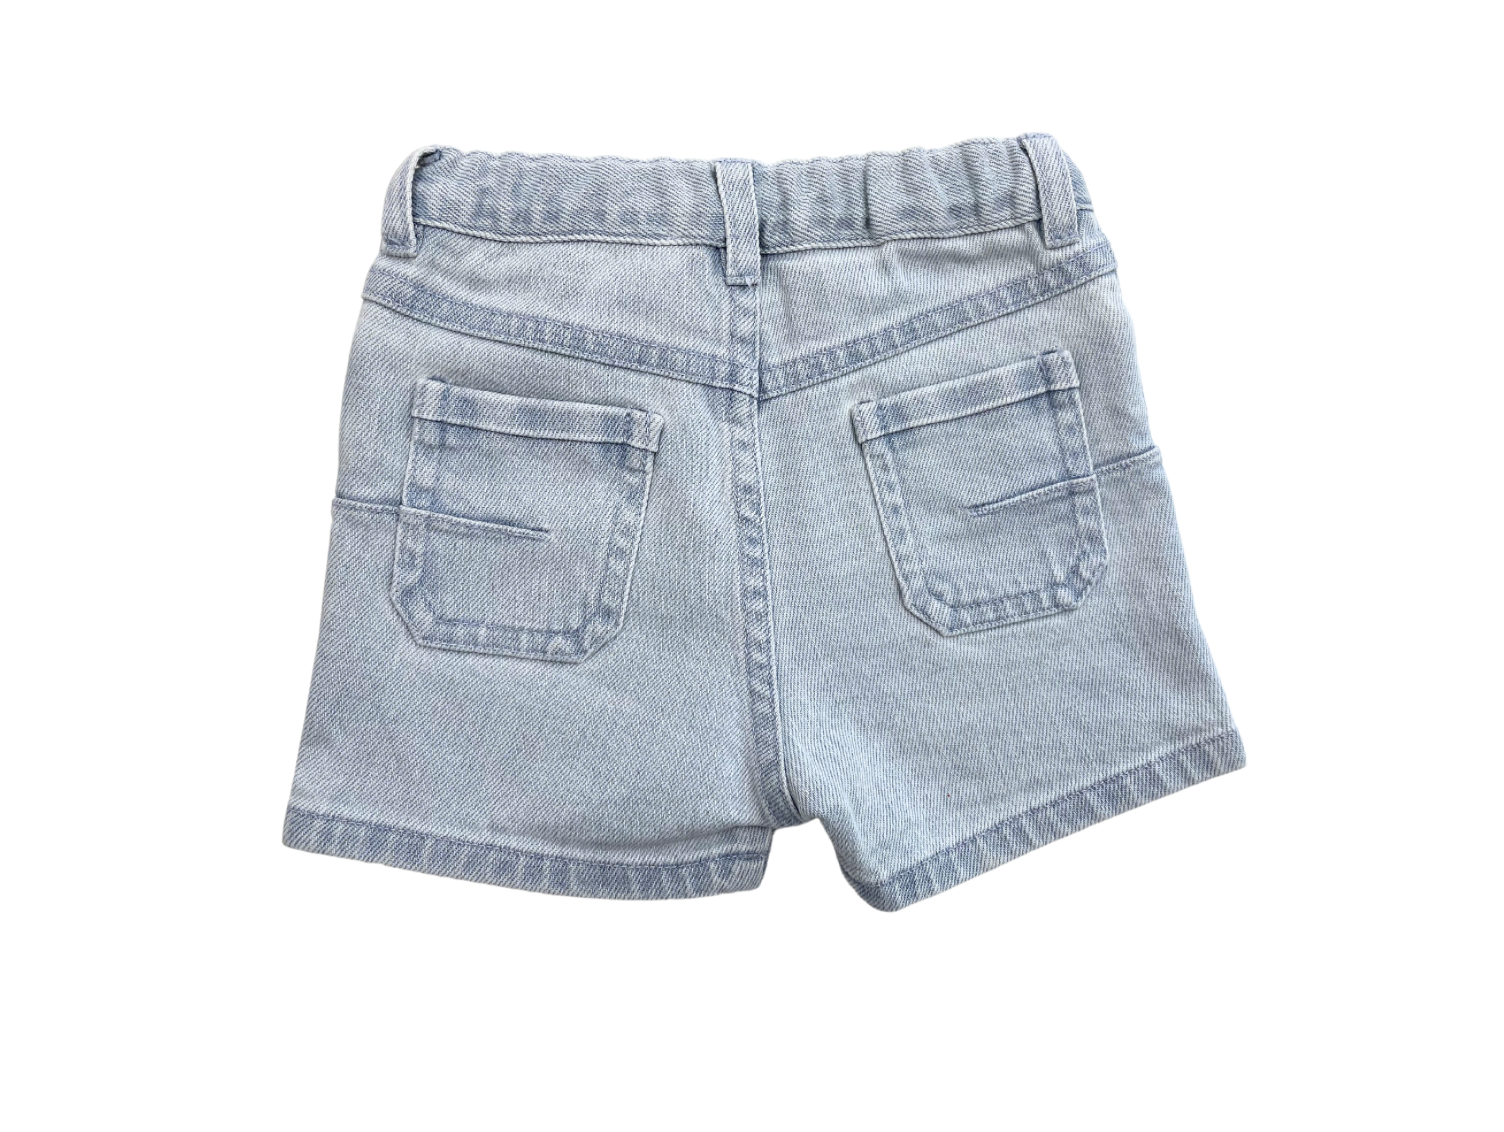 BABY DIOR - Short en jean motif taches de peinture - 3 mois